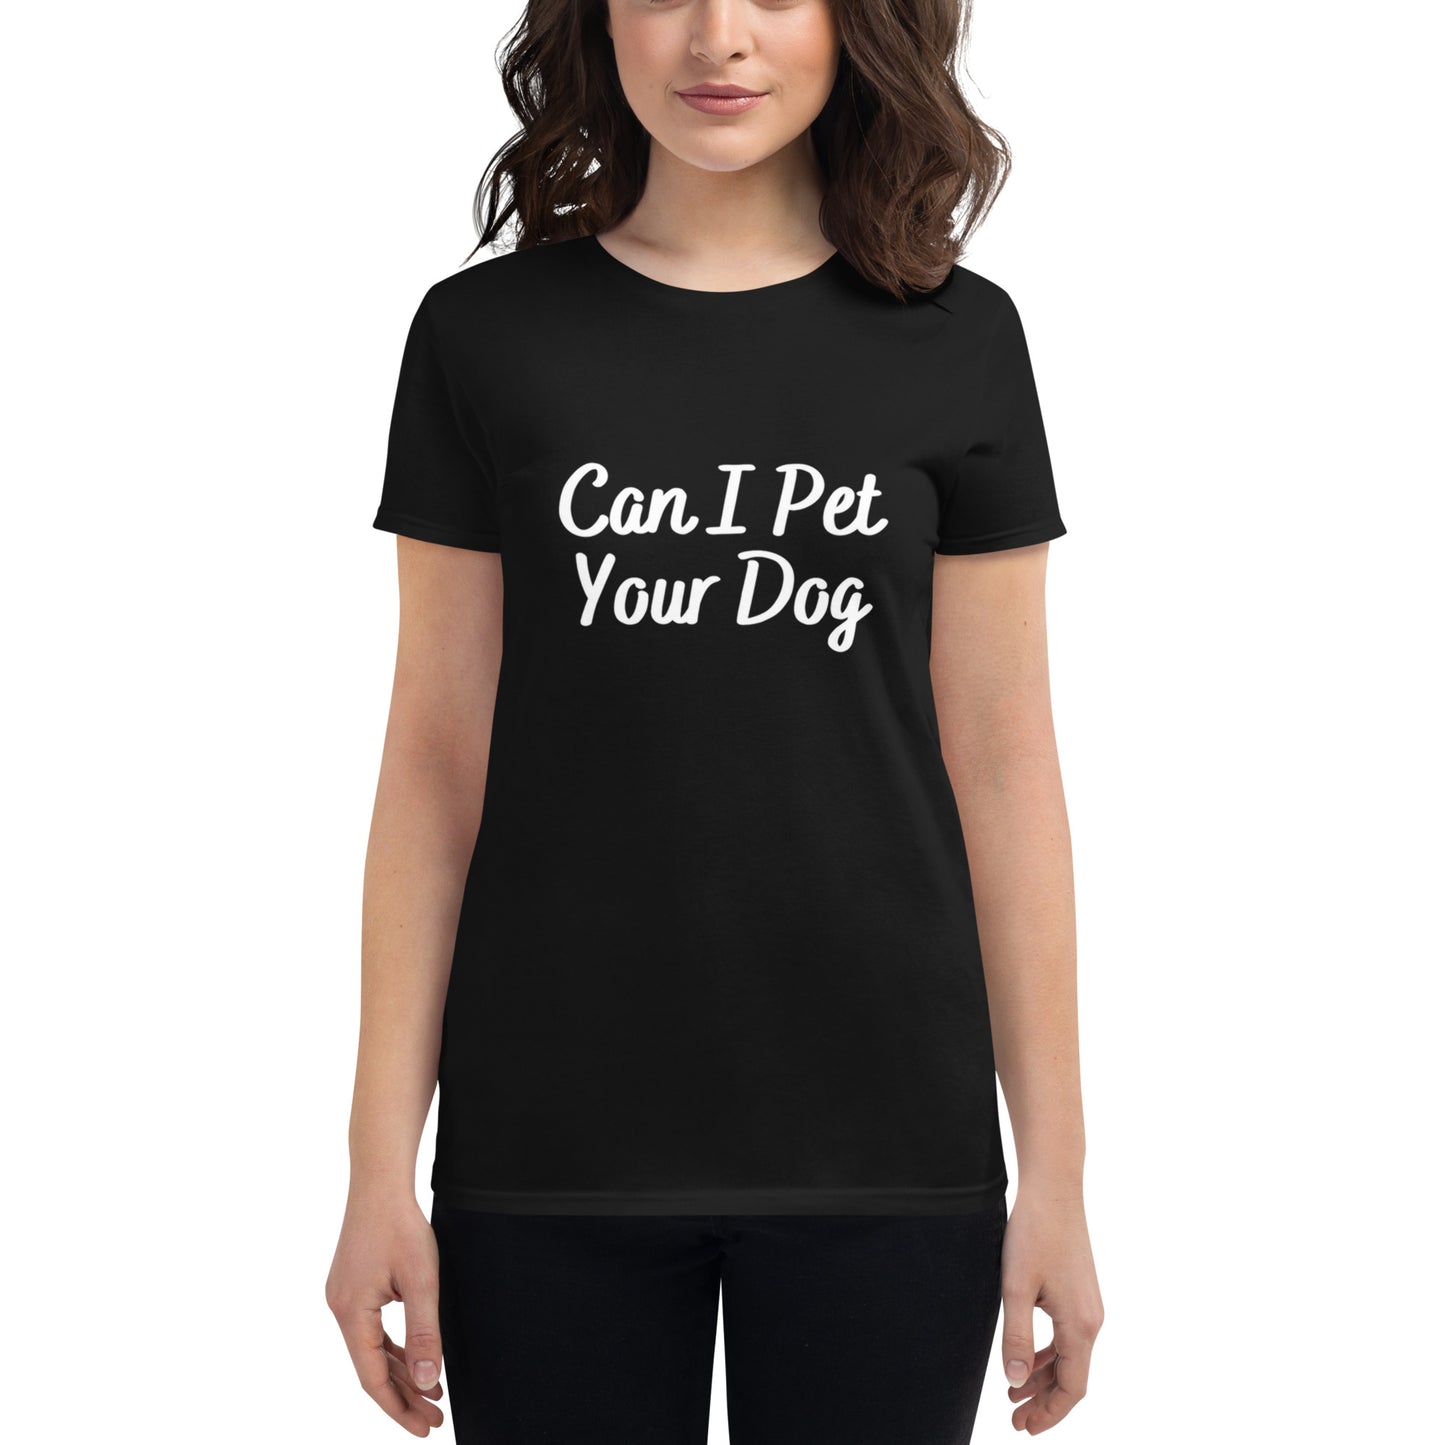 Can I Pet Your Dog Women's short sleeve t-shirt